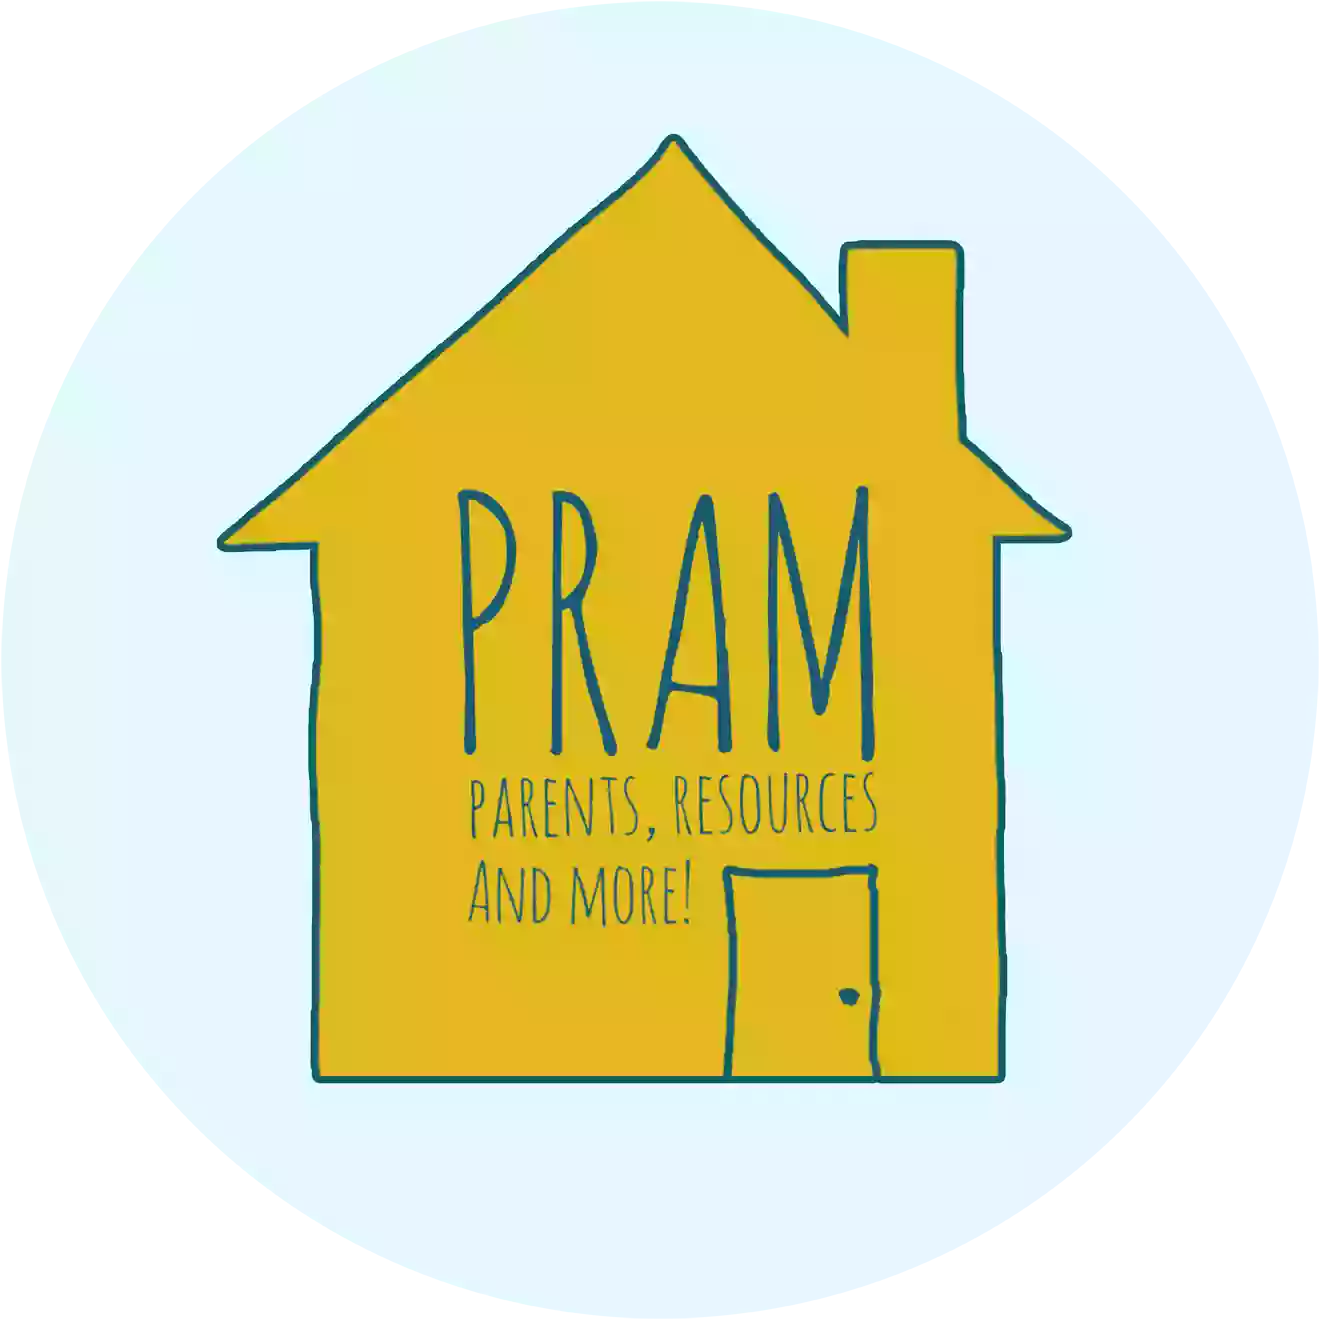 PRAM (Parents, Resources and More)